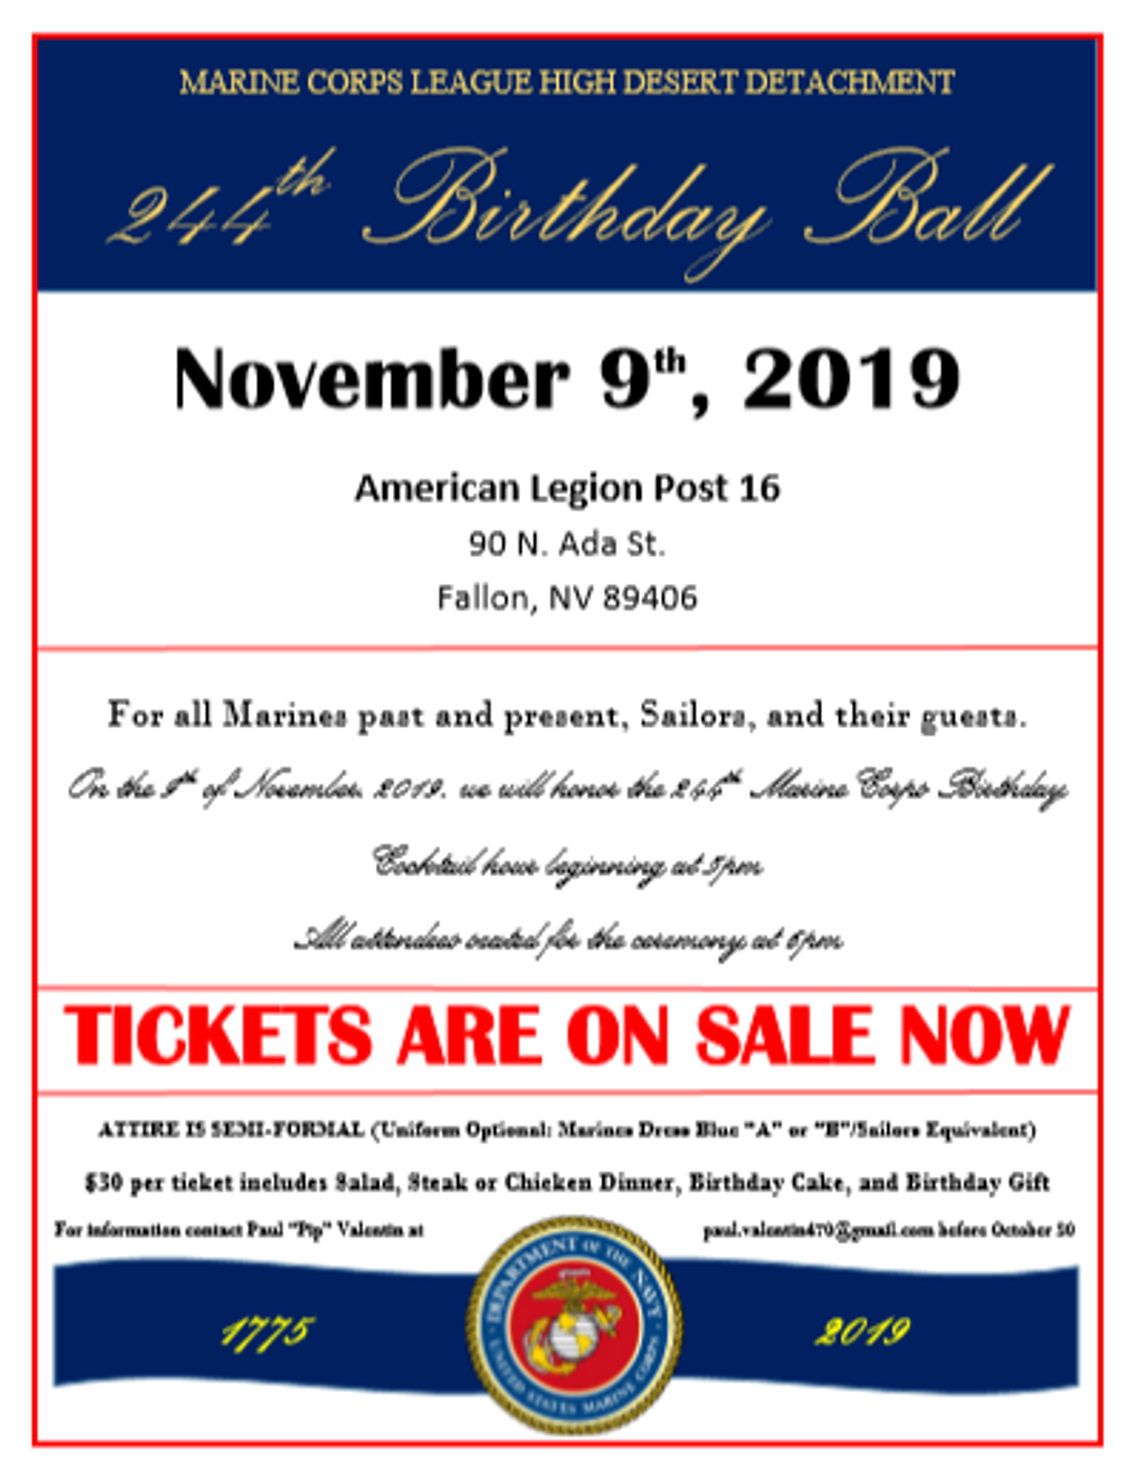 Marine Corp Birthday Ball set for November 9th